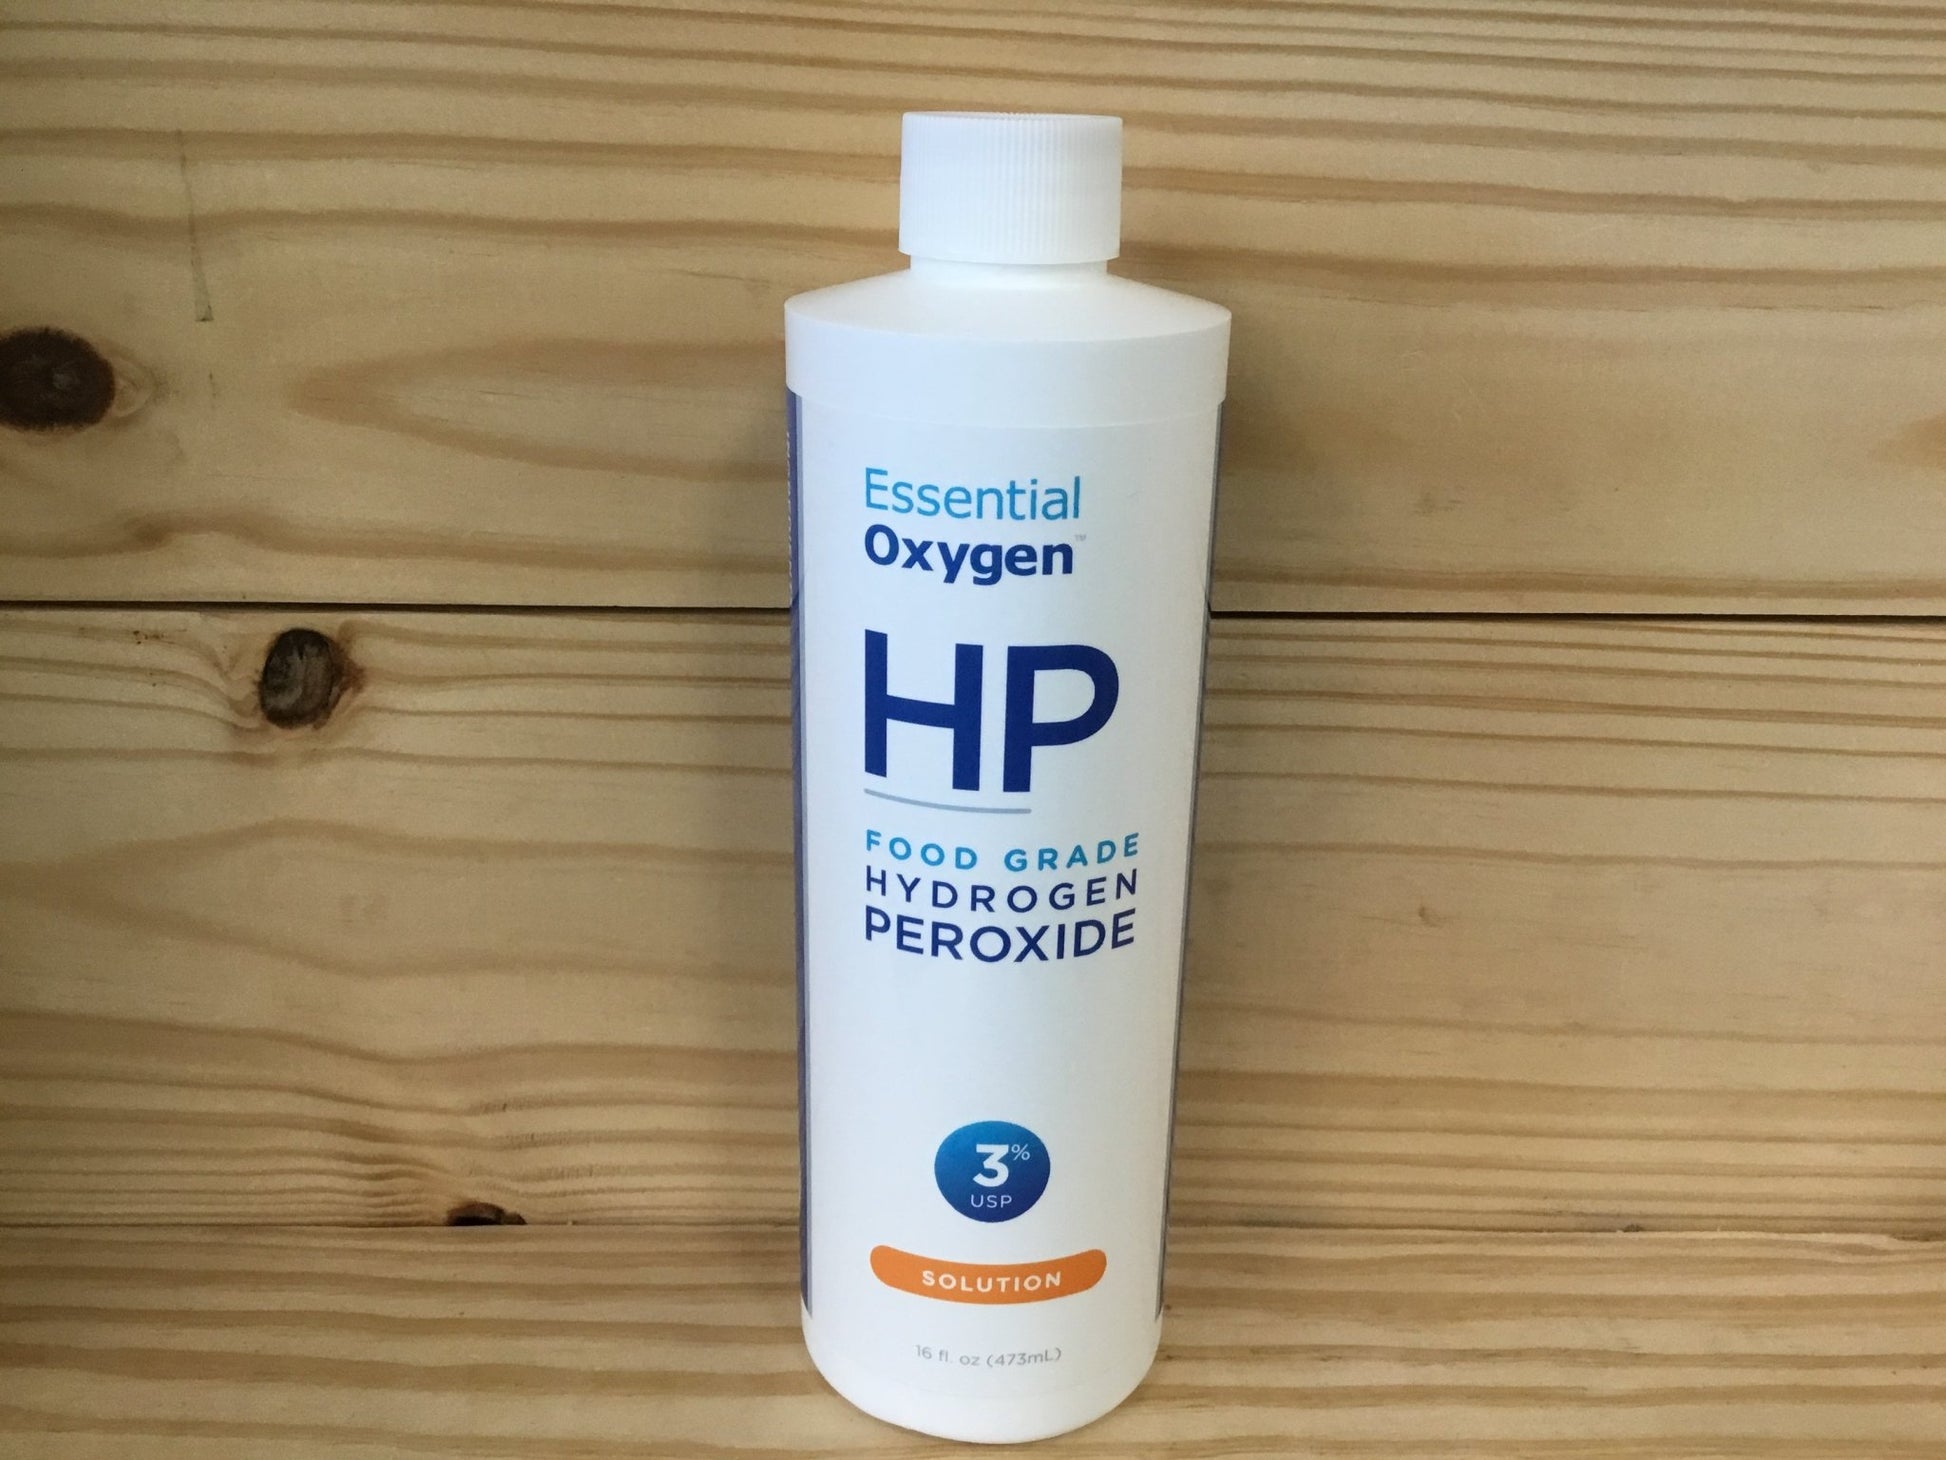 HP Hydrogen Peroxide Food Grade 3% - One Life Natural Market NC